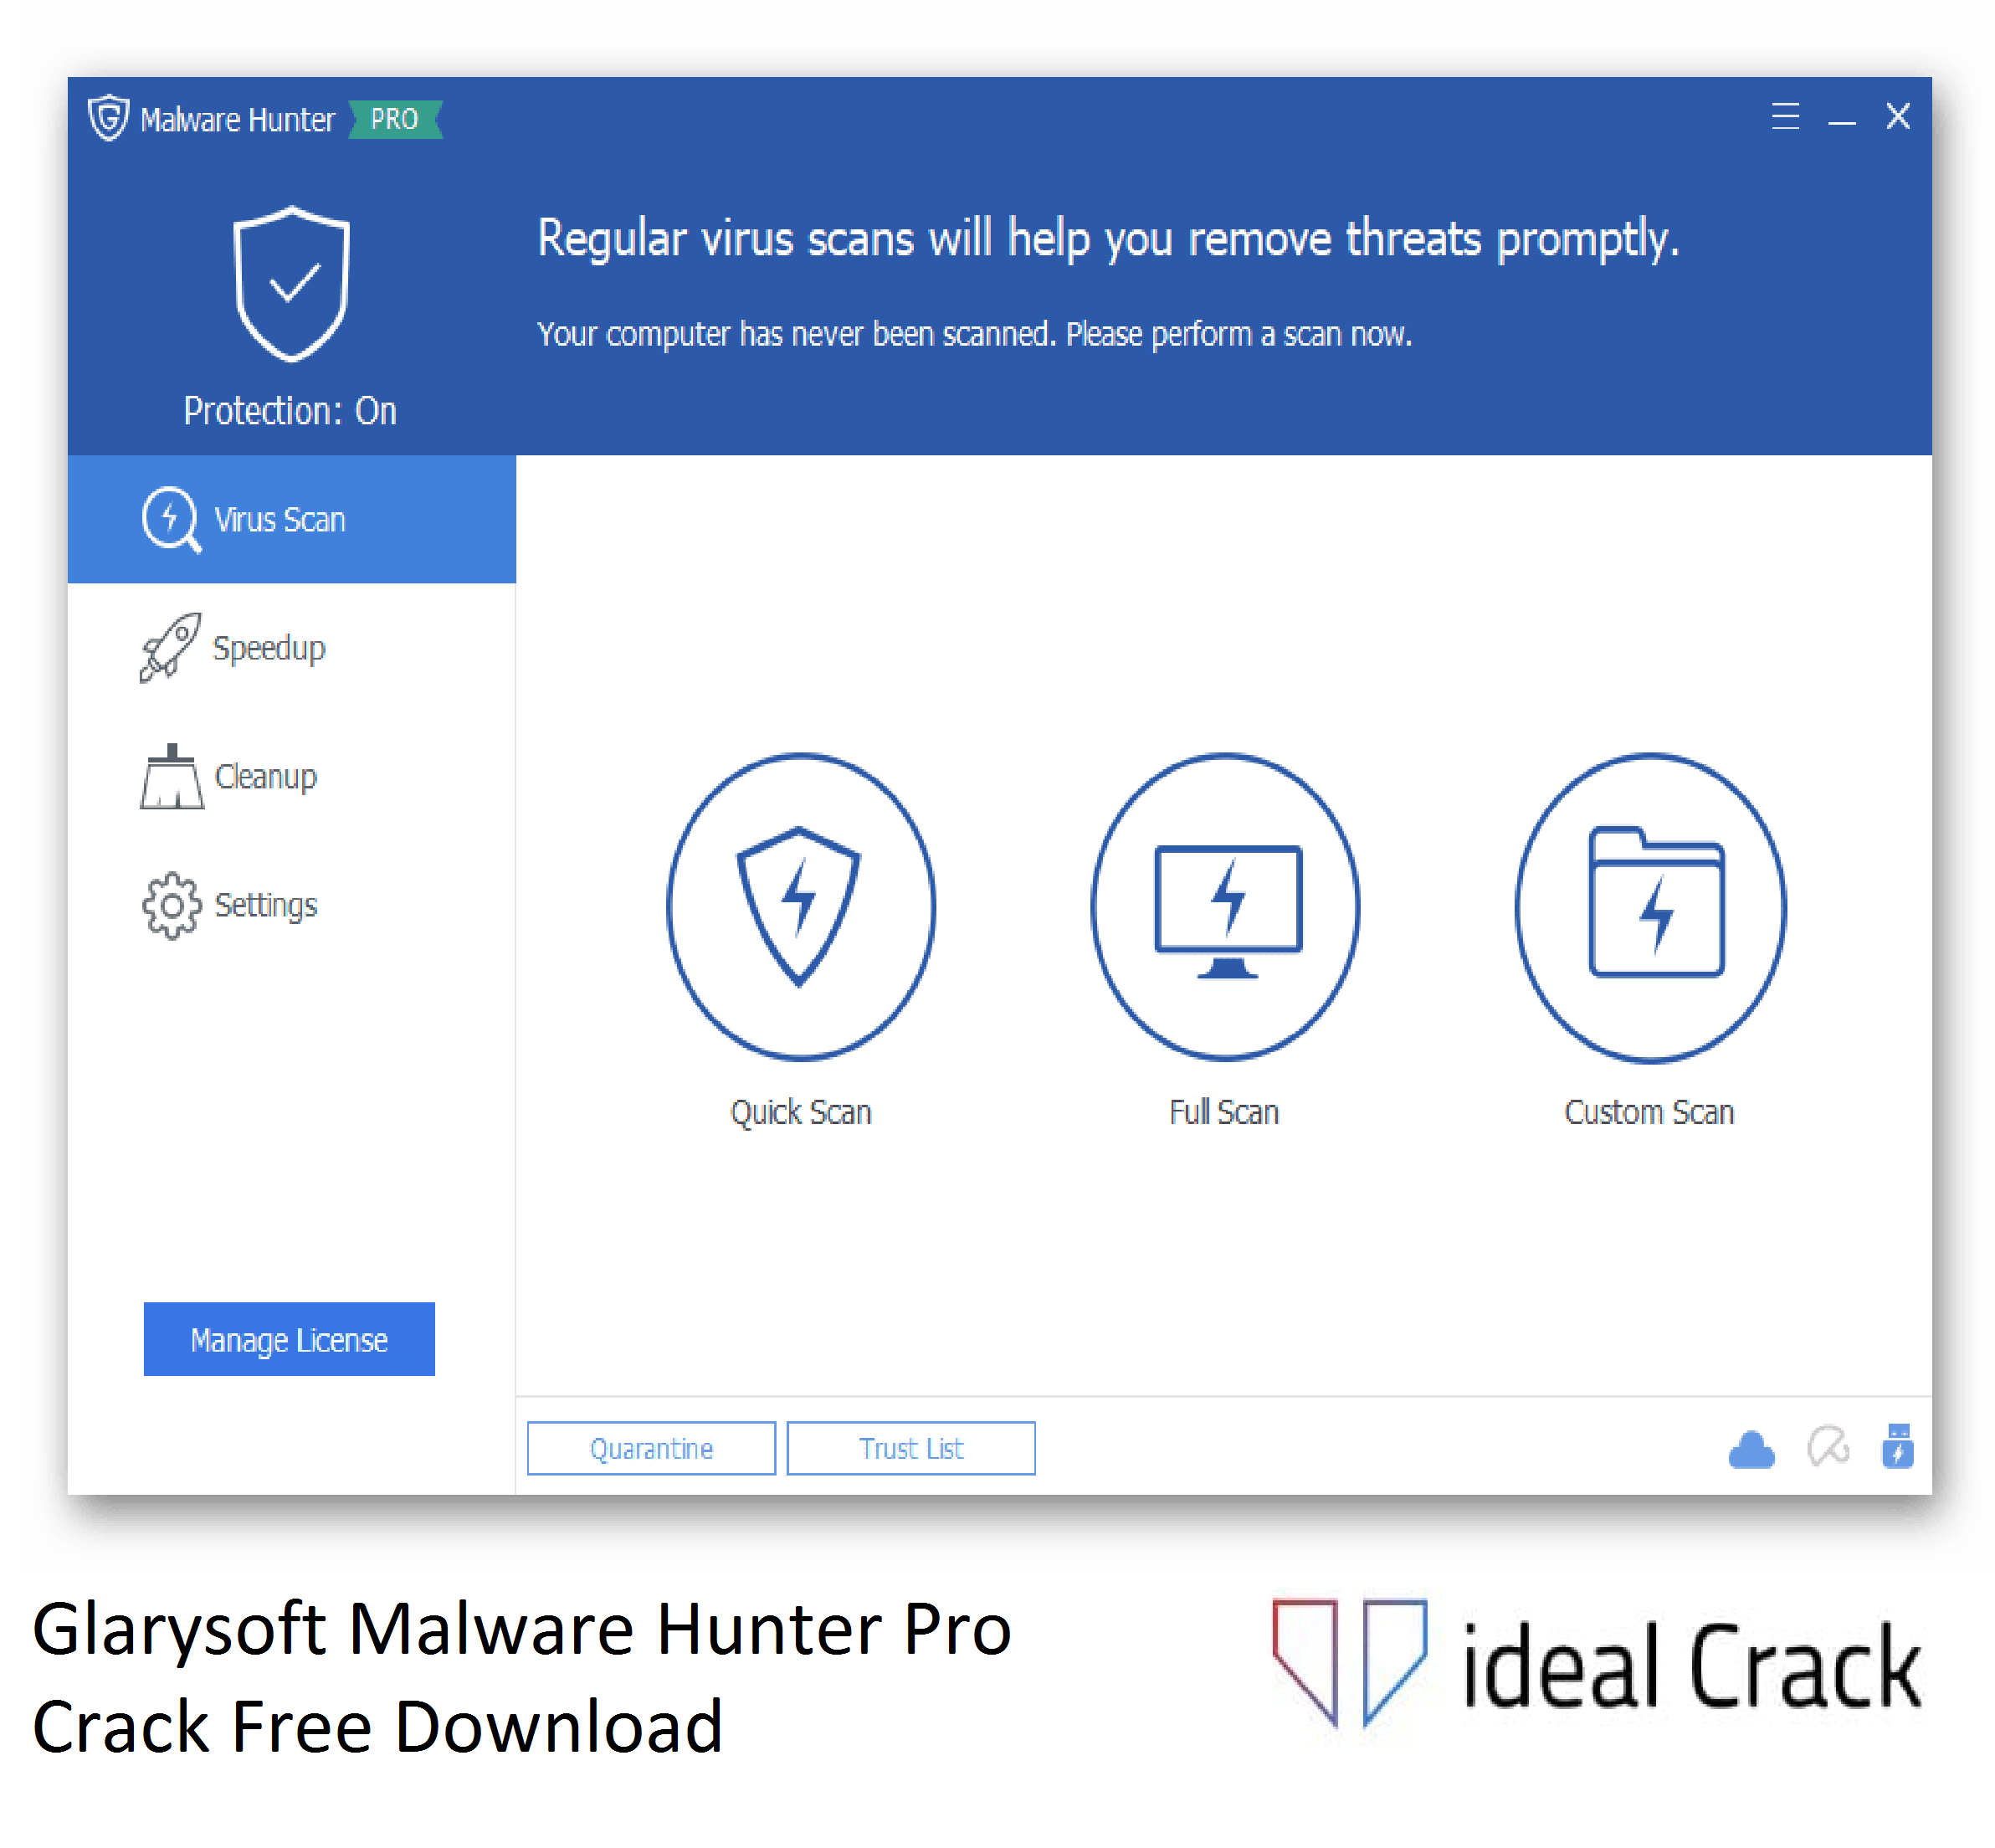 Glarysoft Malware Hunter Pro Crack Free Download